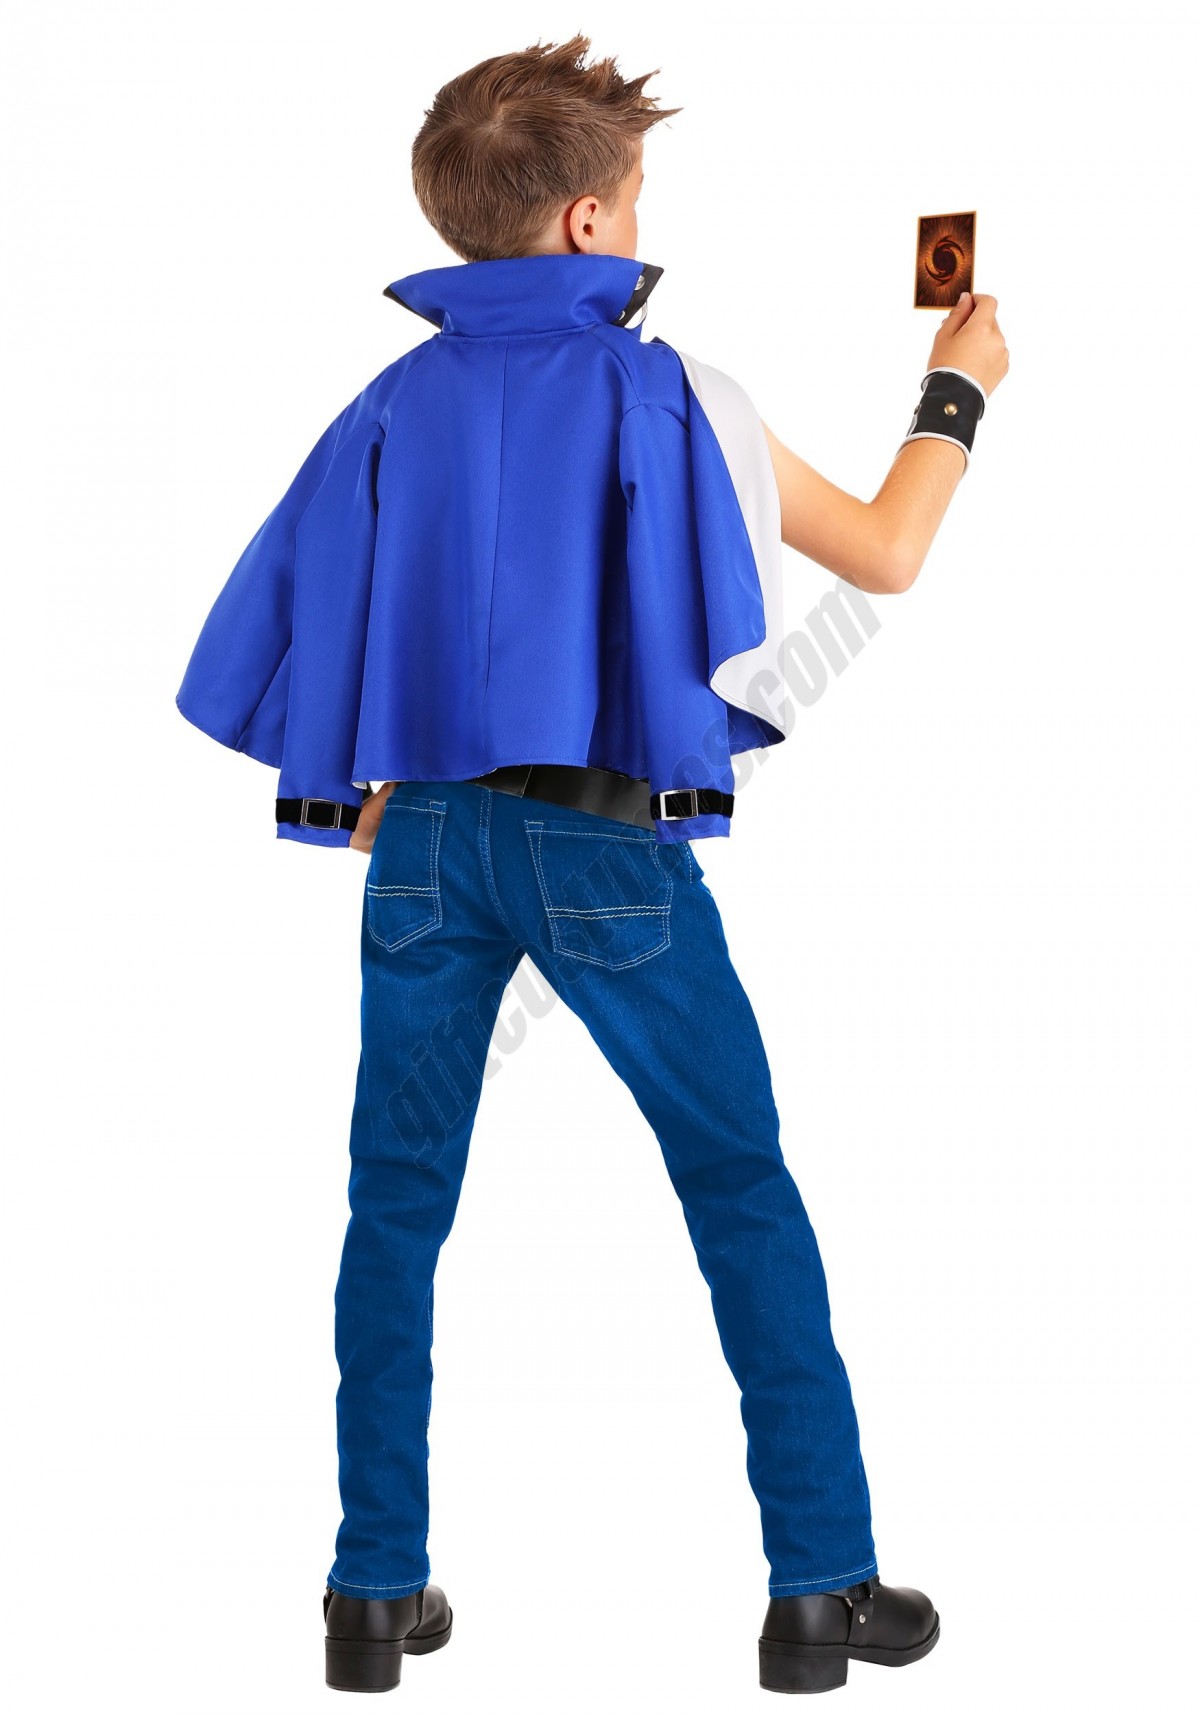 Yu-Gi-Oh YuGi Boy's Costume Promotions - -1